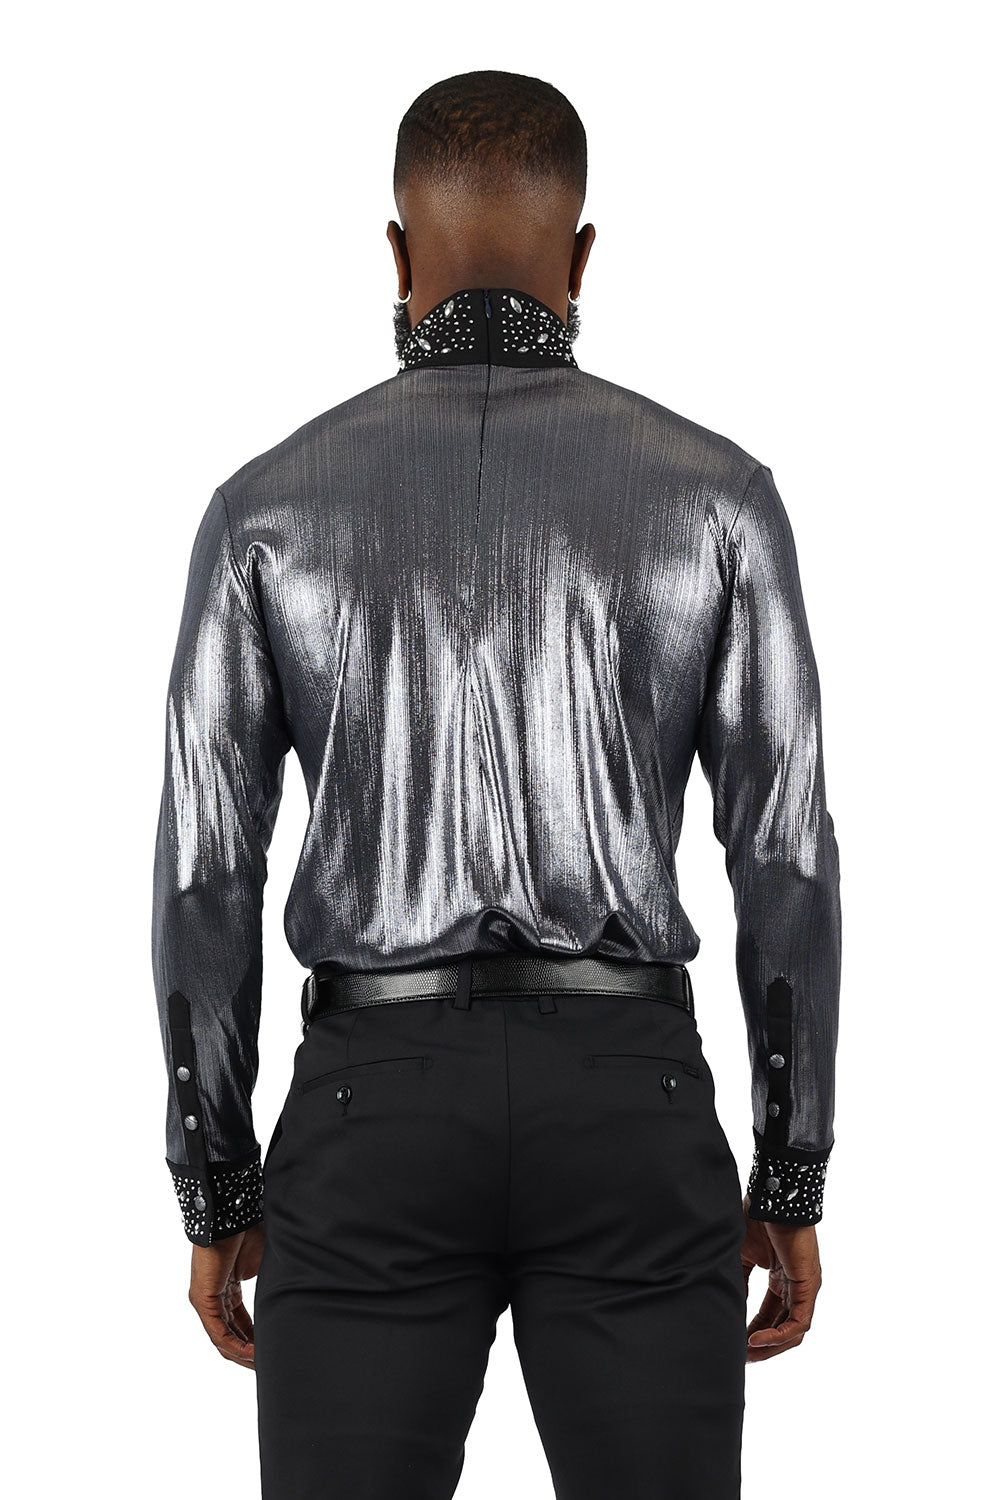 BARABAS Men's Luxury Rhinestone Long Sleeve Turtle Neck shirt 3MT04 Black and Silver